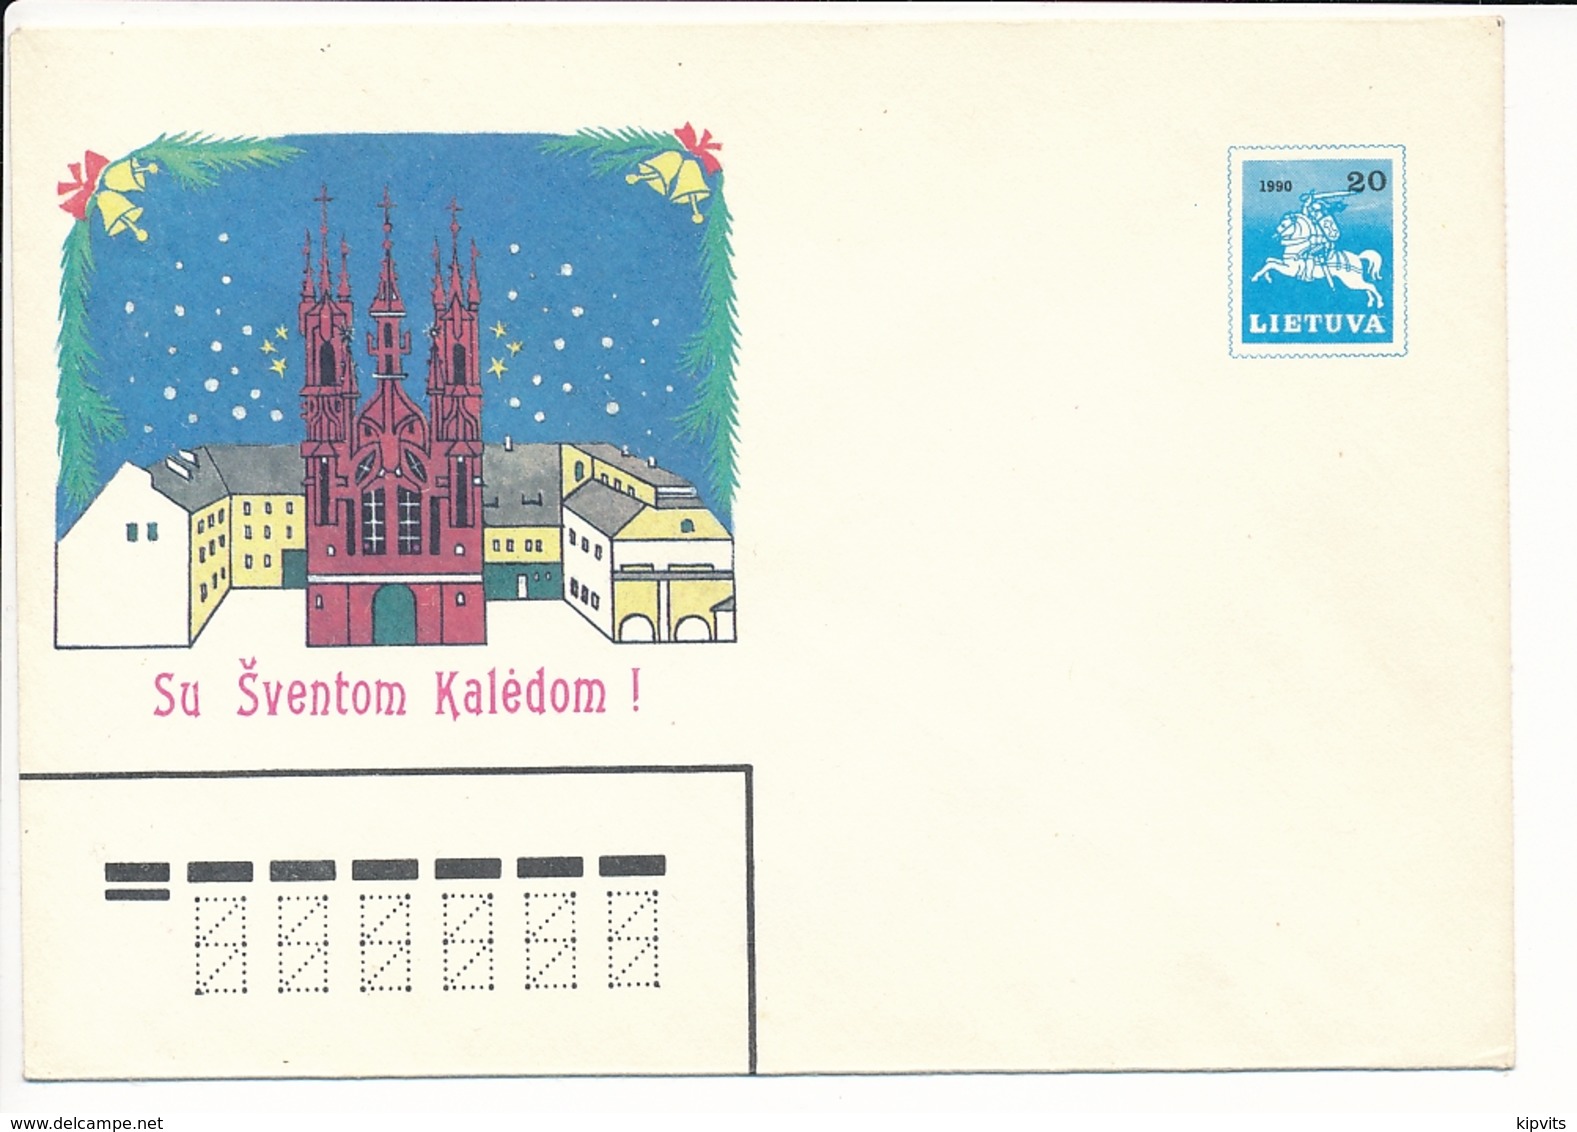 Mi U 8 Mint Stationery Cover / Church Of St. Anne, Vilnius, Christmas / Vytis - 17 December 1990 - Lithuania